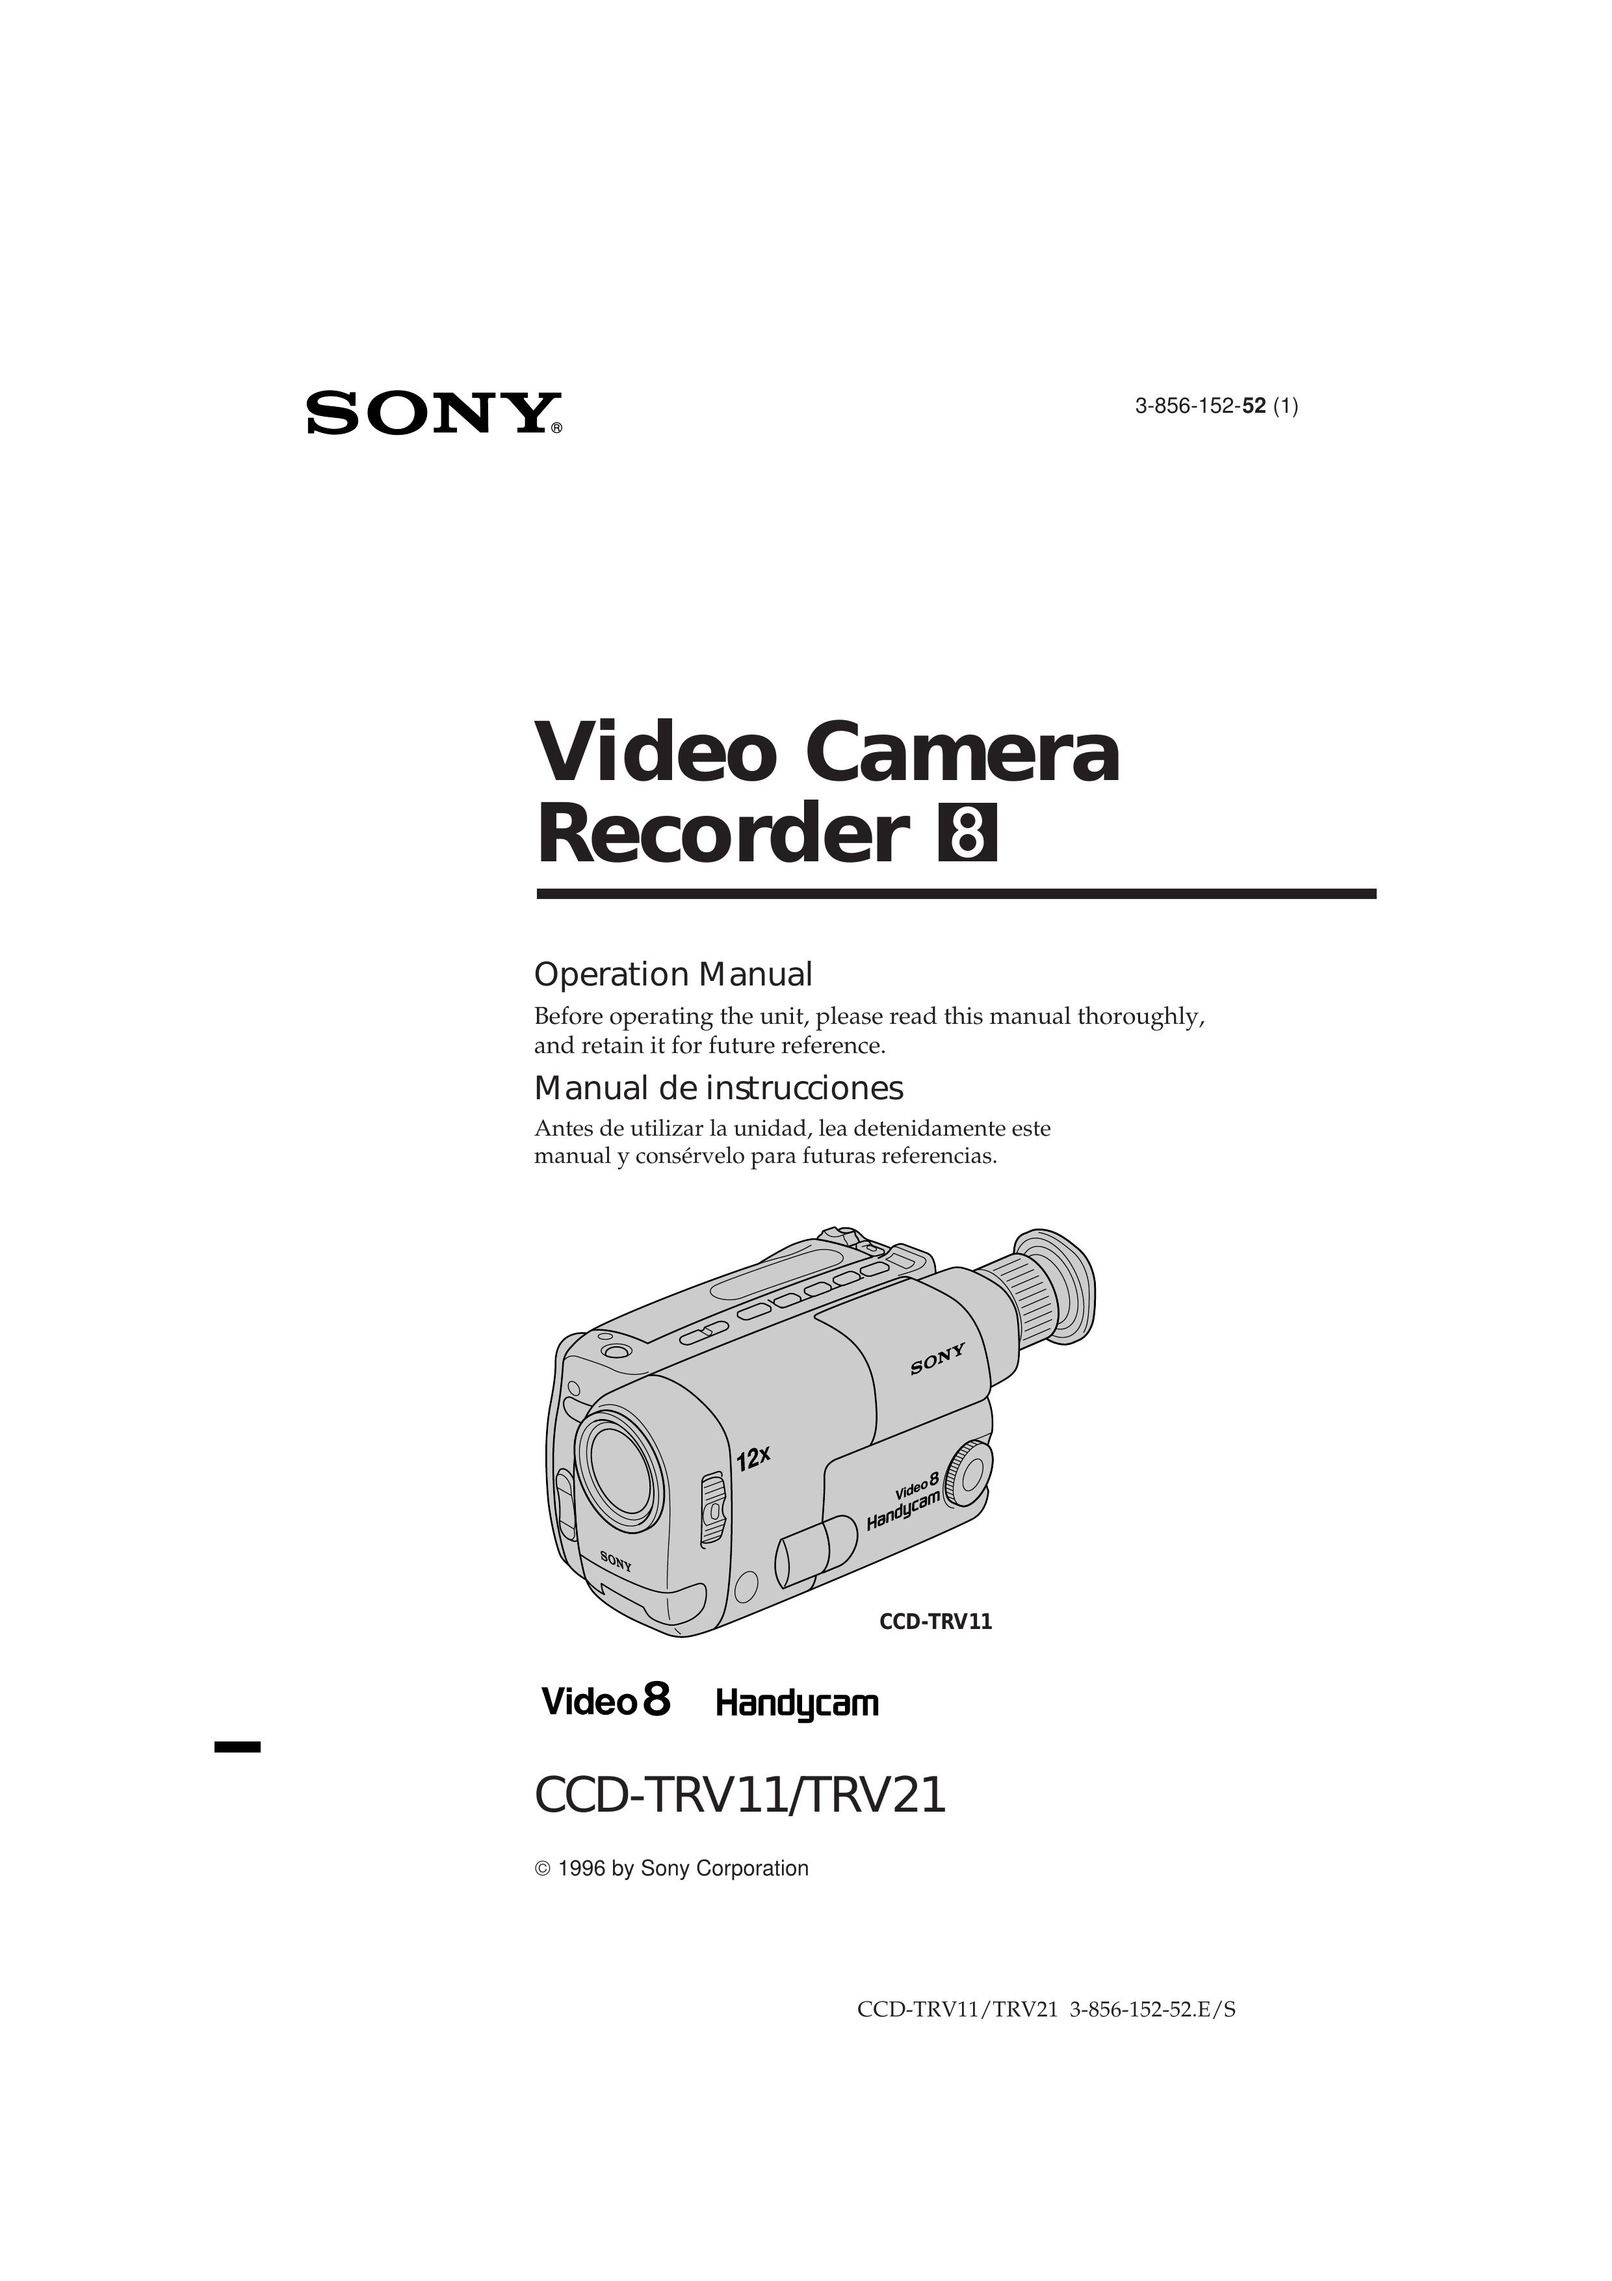 Sony CCD-TRV21 VCR User Manual